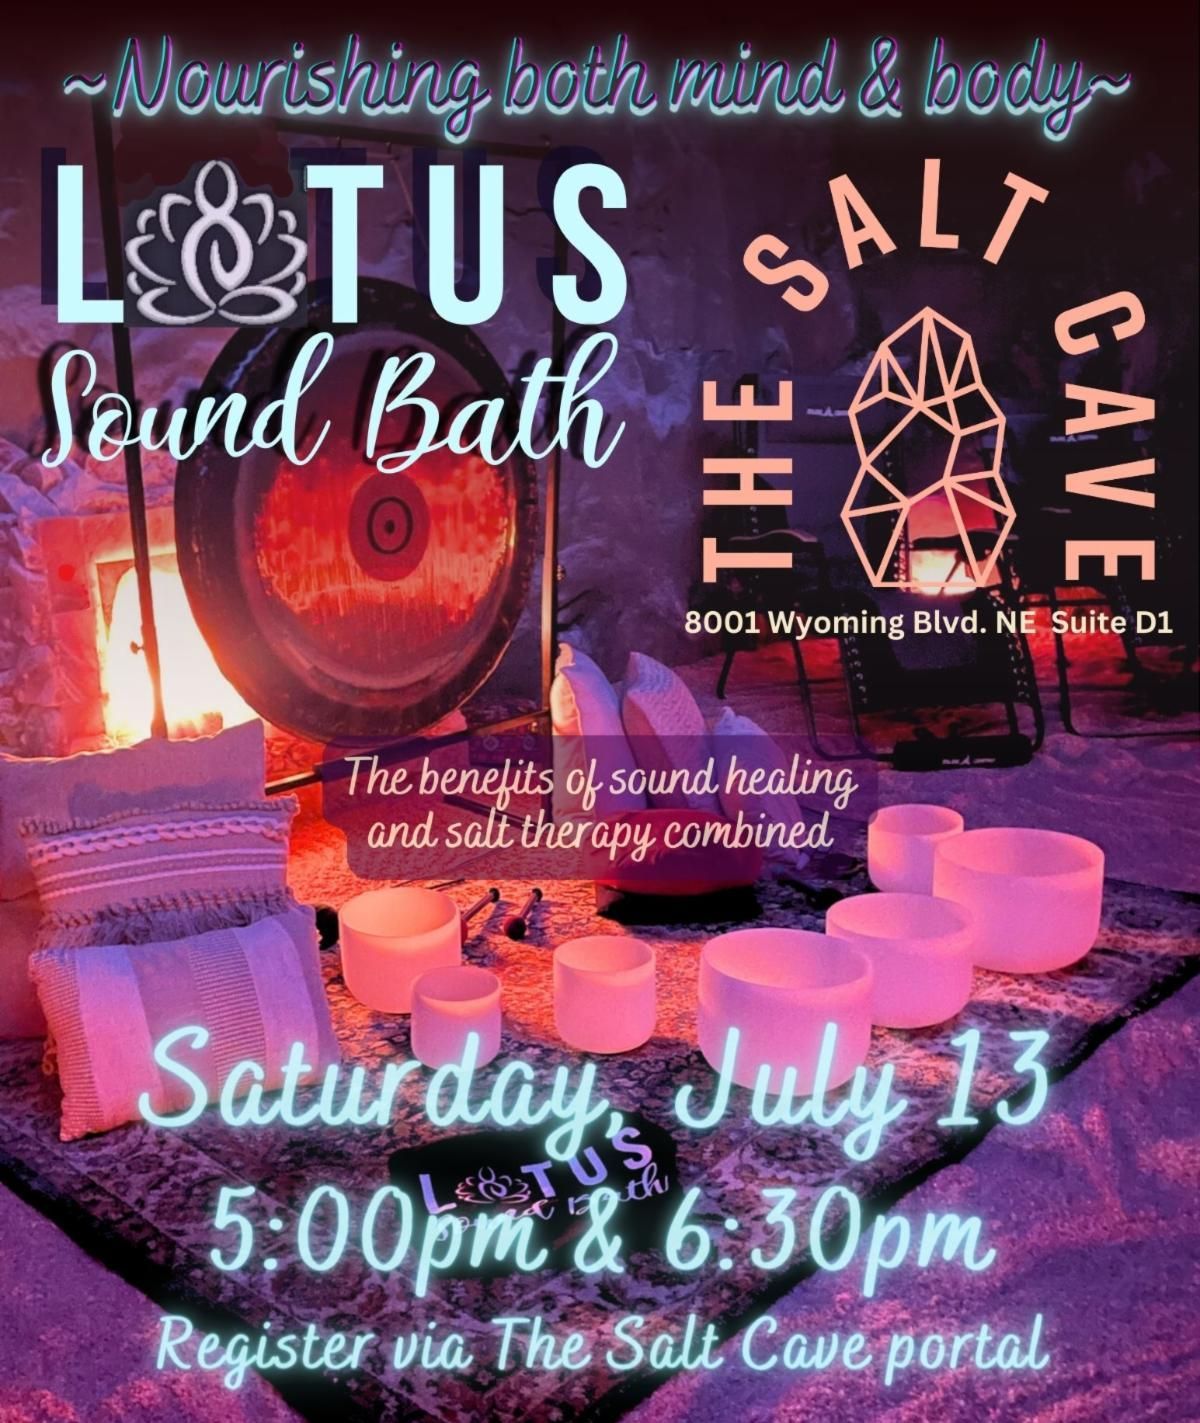 Lotus Sound Bath at The Salt Cave ABQ